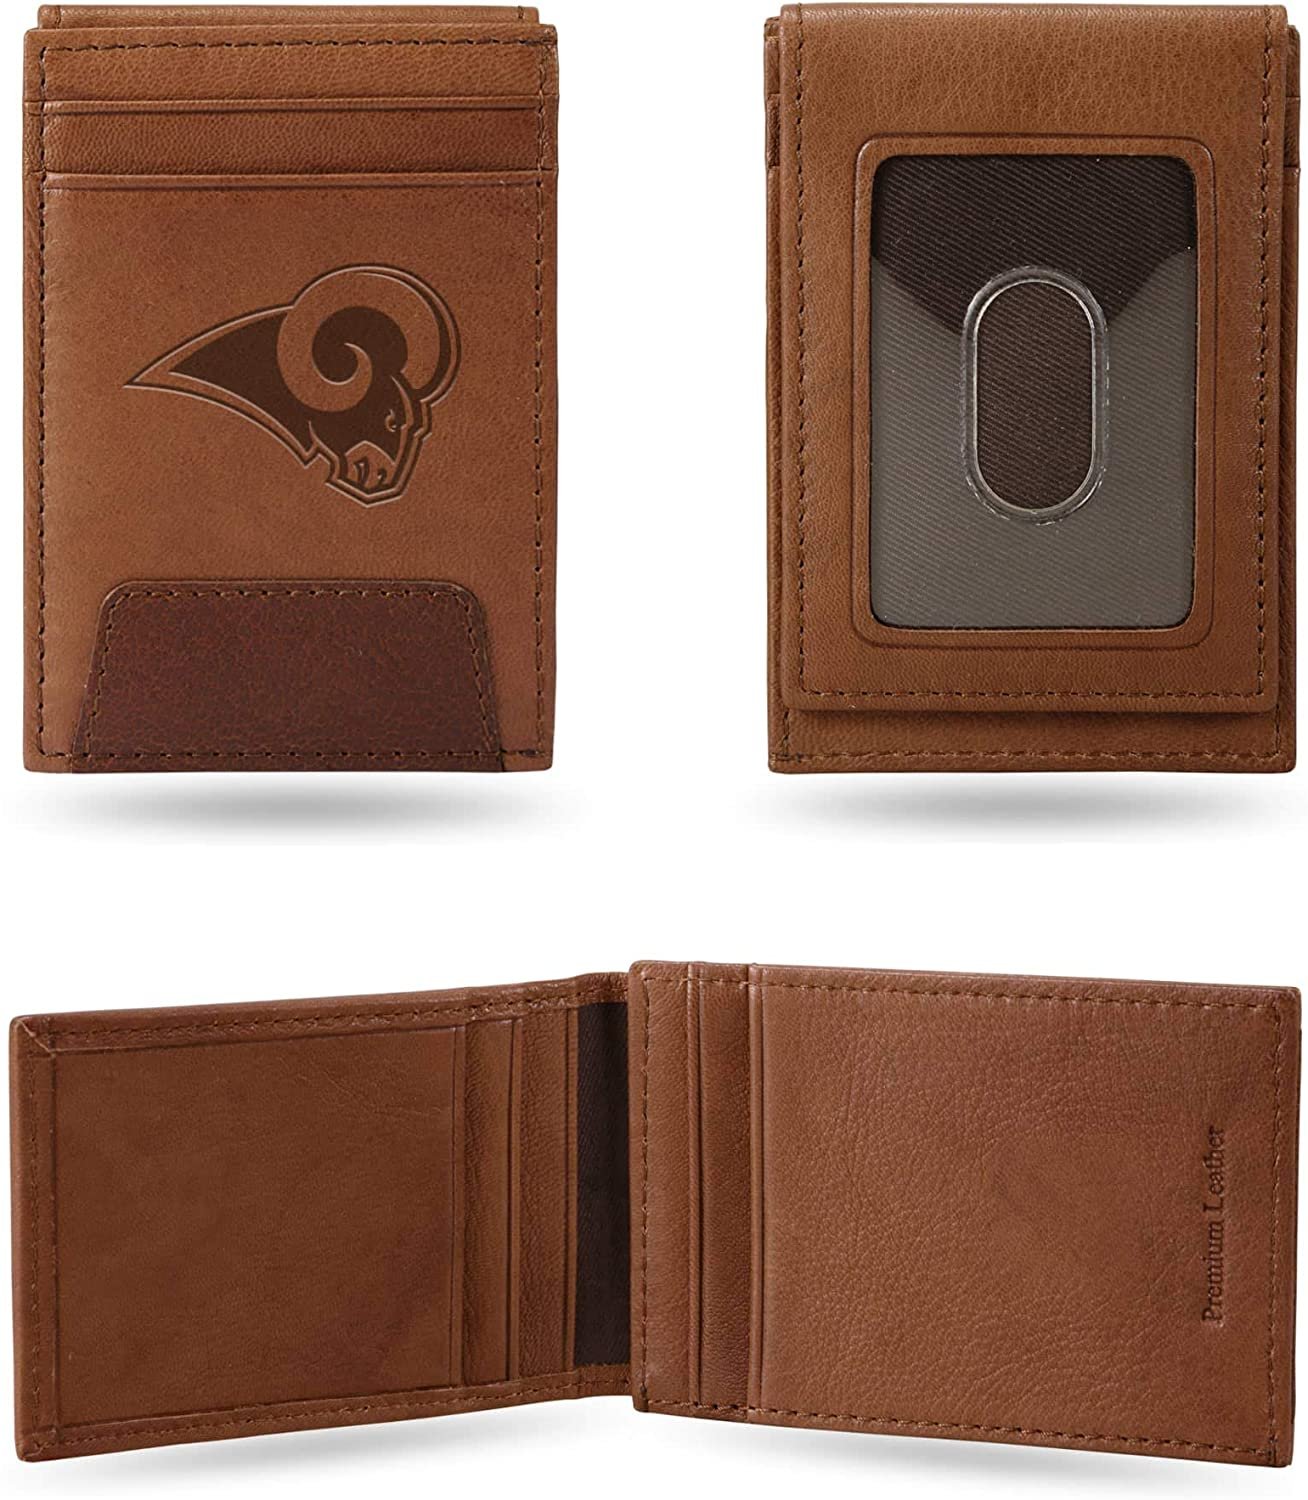 Los Angeles Rams Premium Brown Leather Wallet, Front Pocket Magnetic Money Clip, Laser Engraved